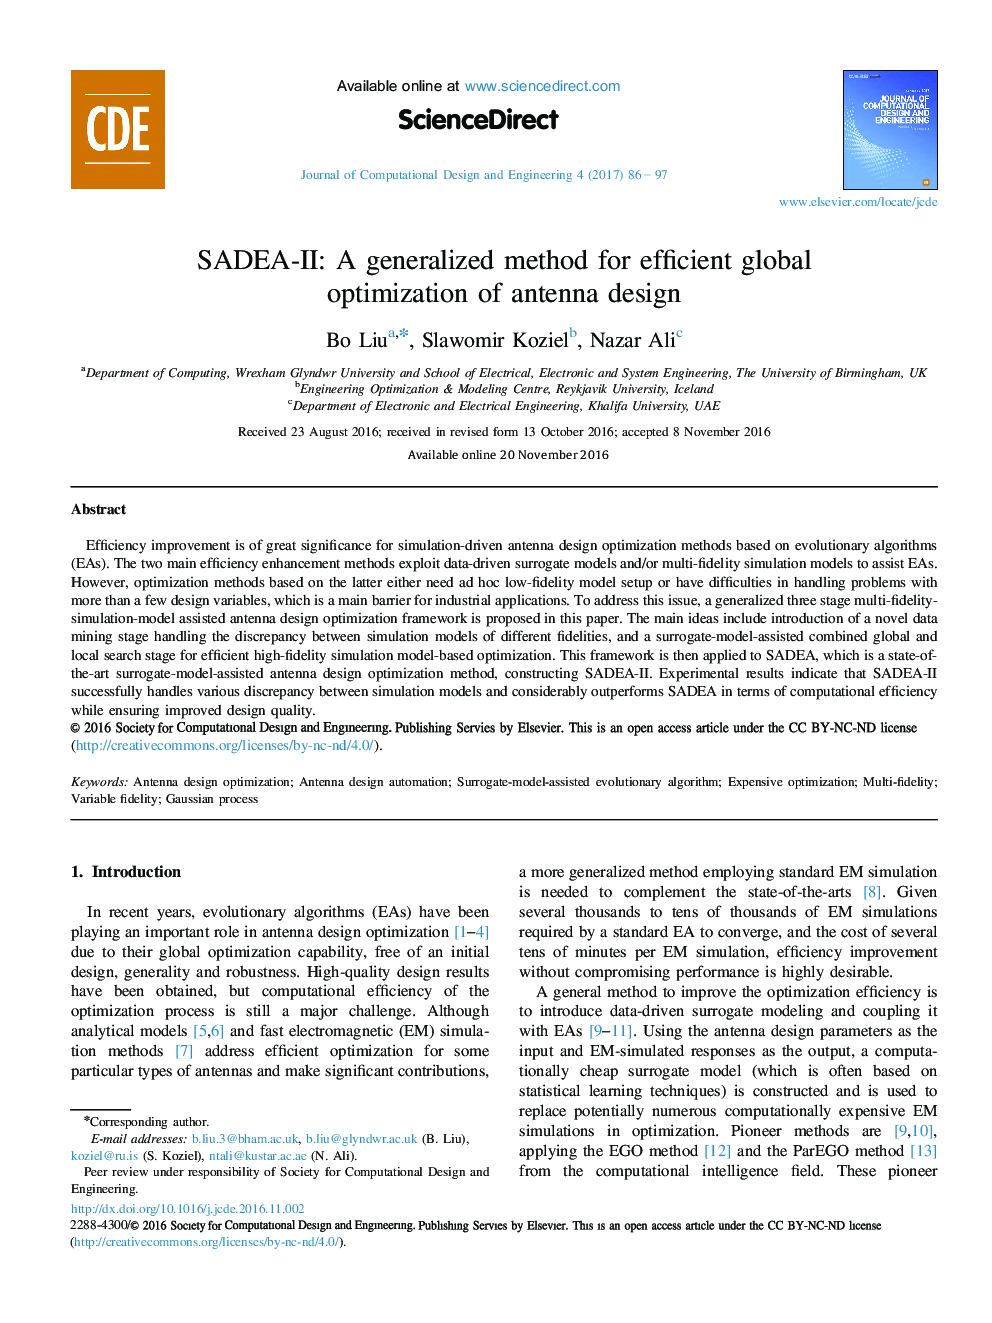 SADEA-II: A generalized method for efficient global optimization of antenna design